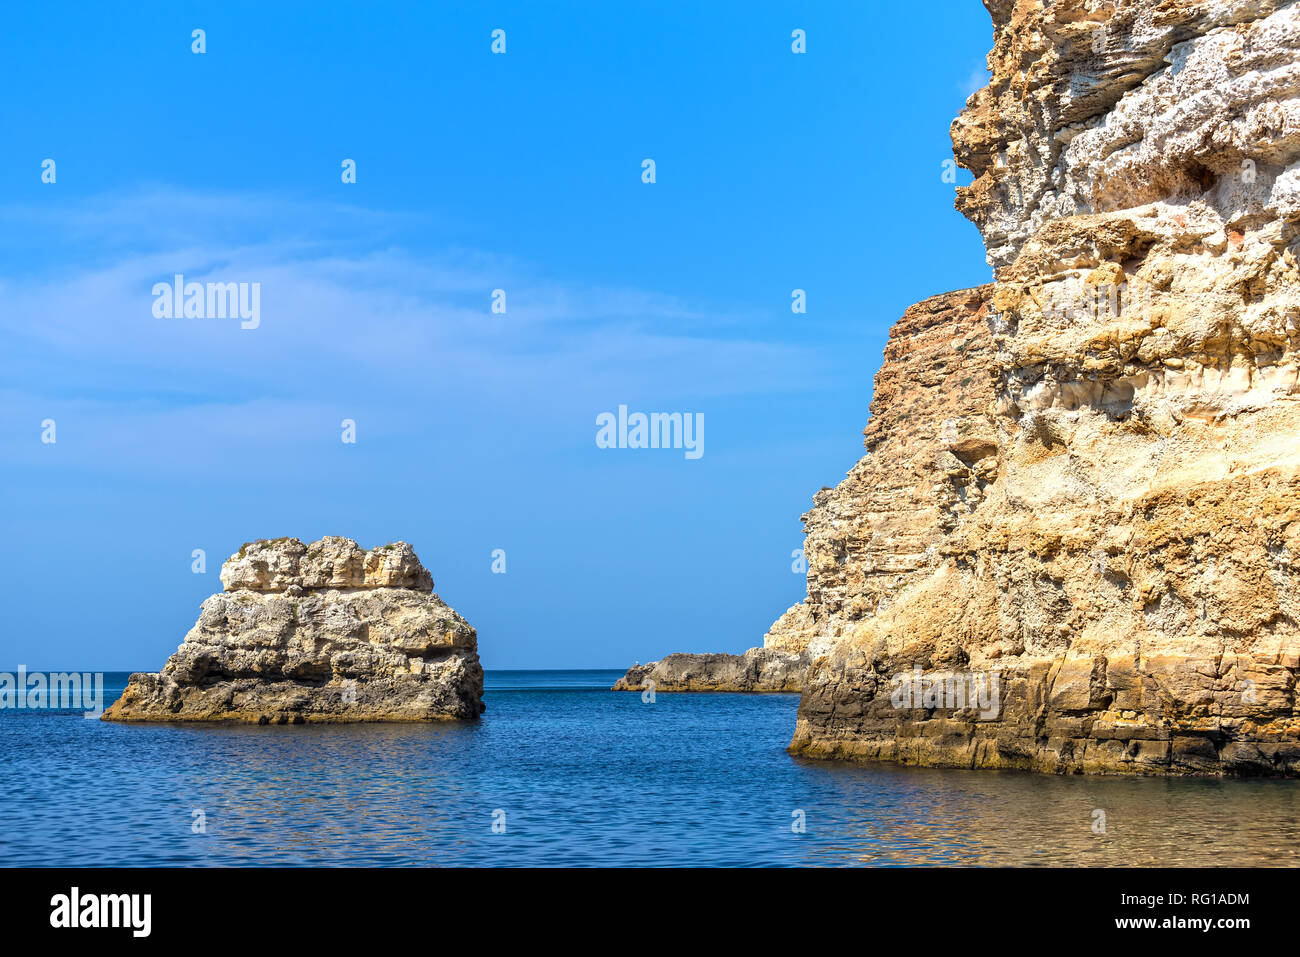 Rocky island in the sea near the rocky shore Stock Photo